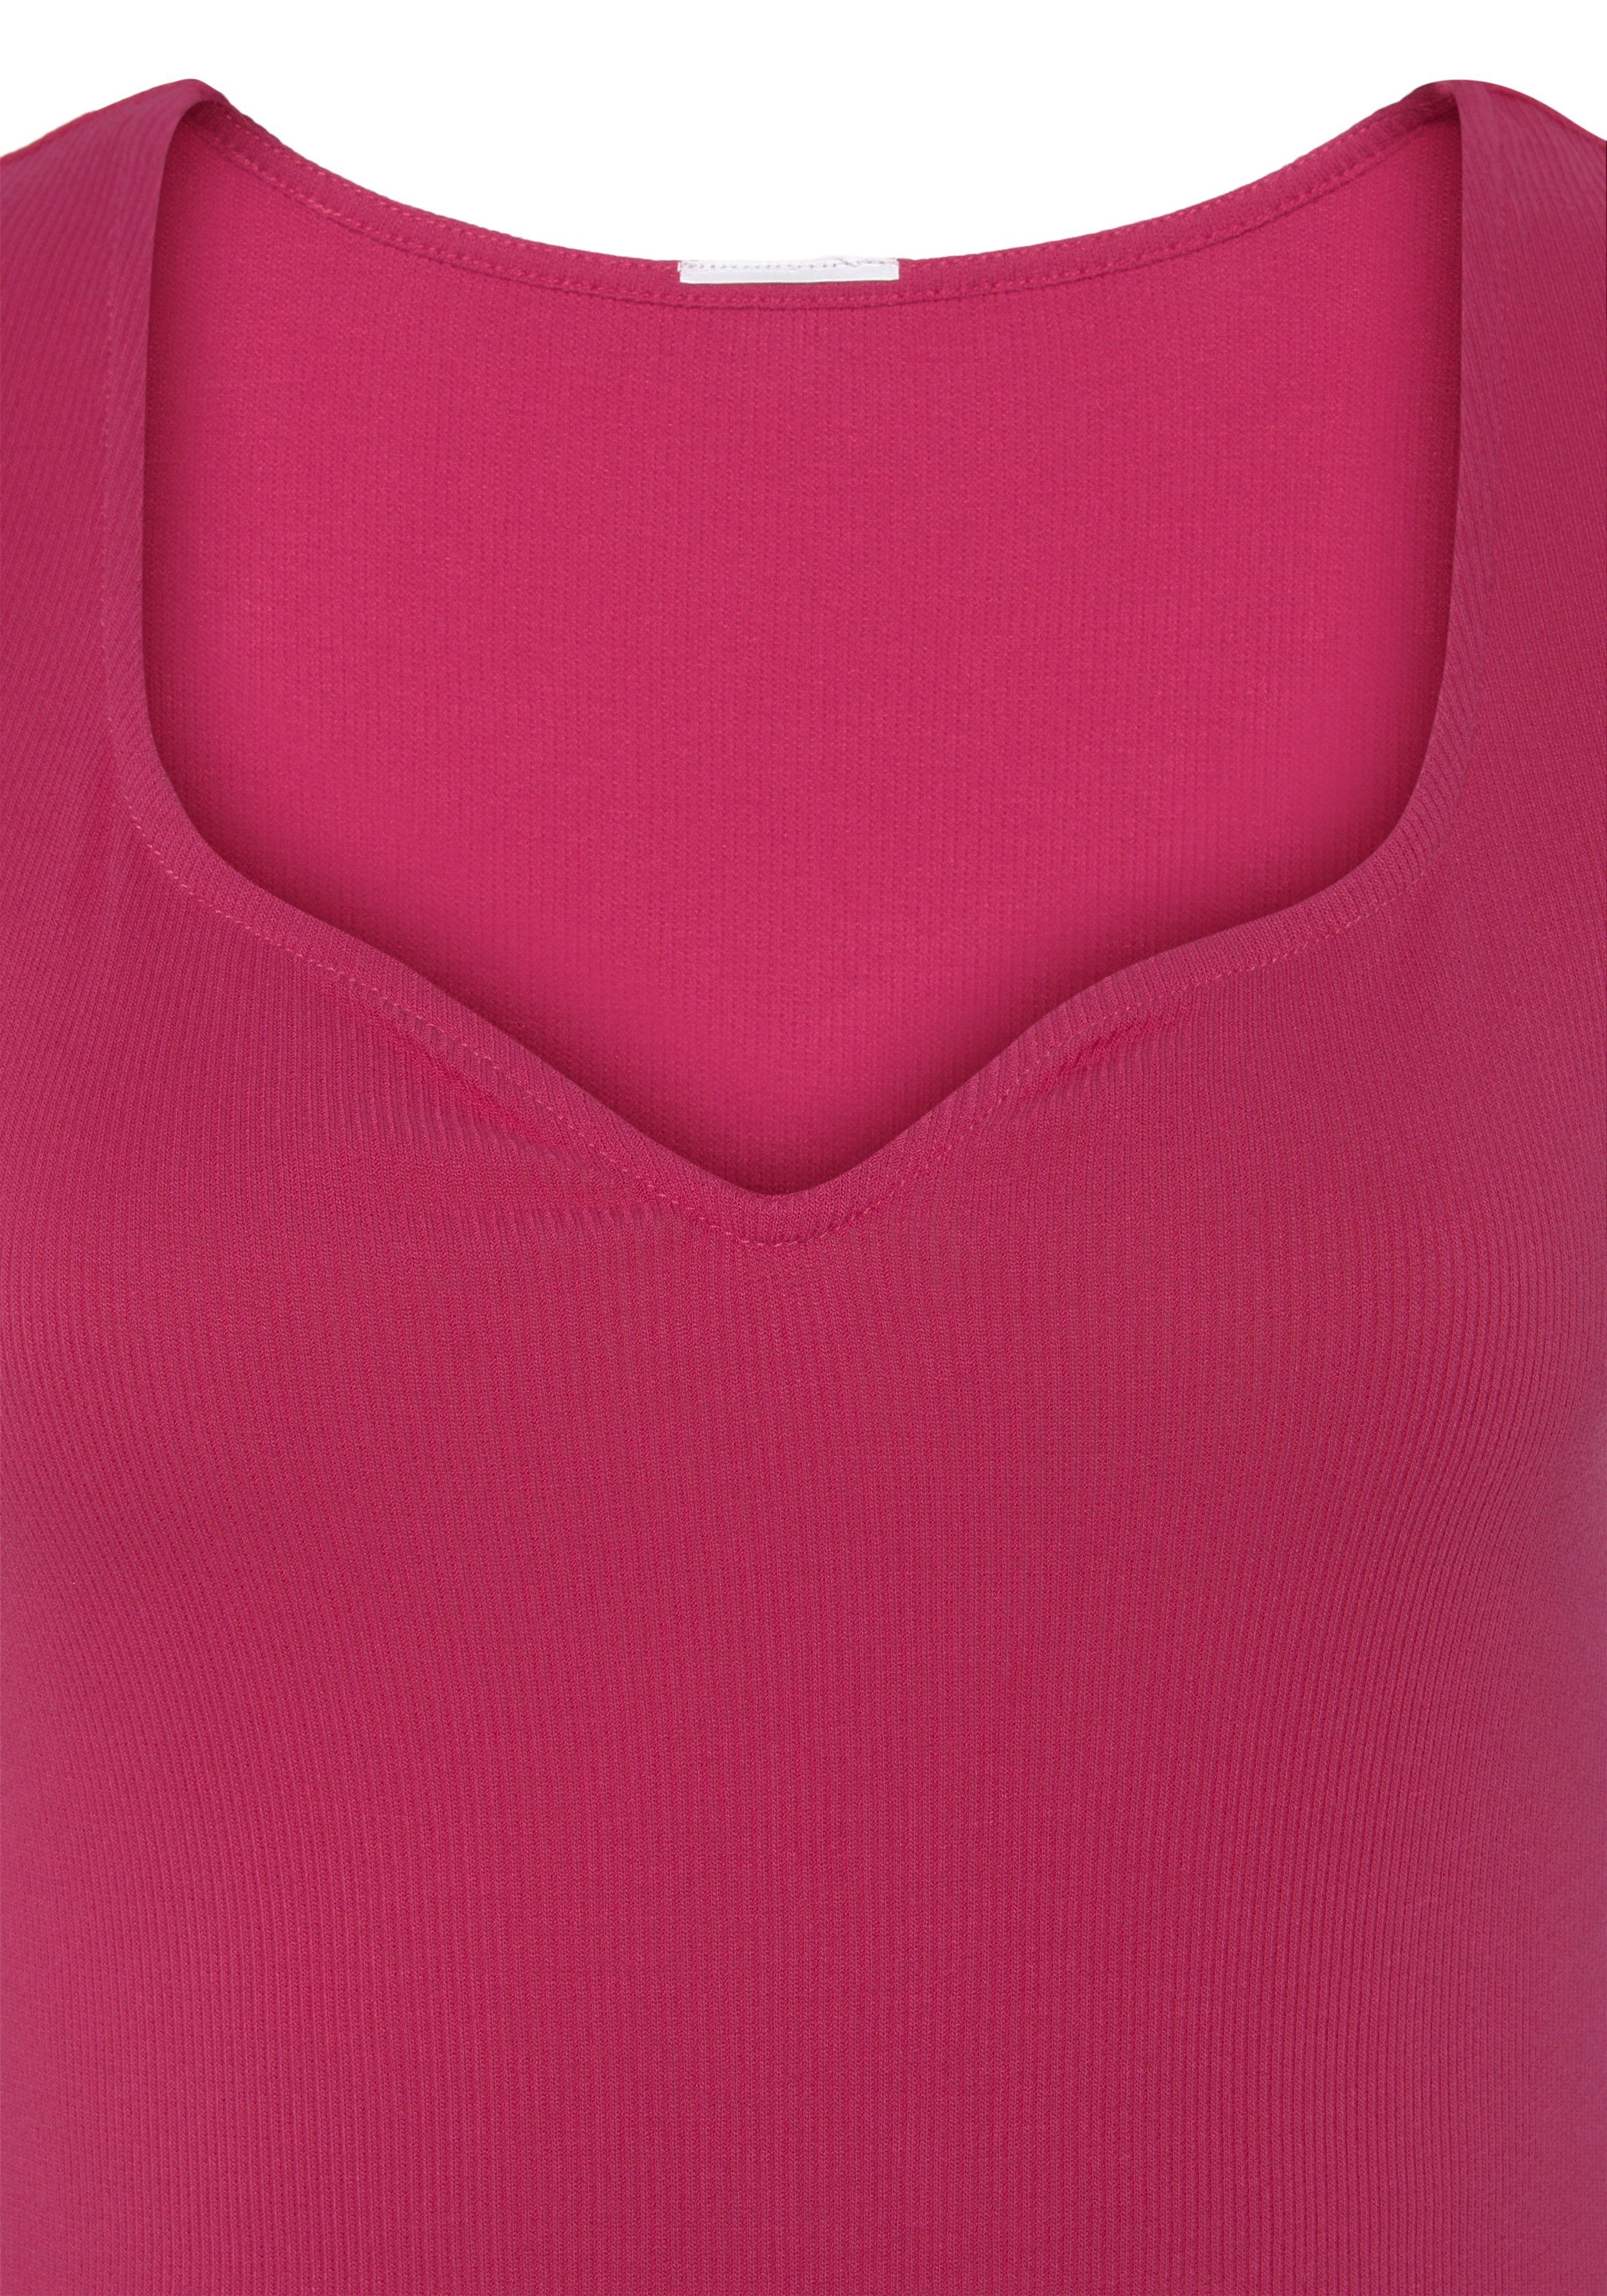 pink mit T-Shirt Dekolleté (1-tlg) Vivance herzförmigen